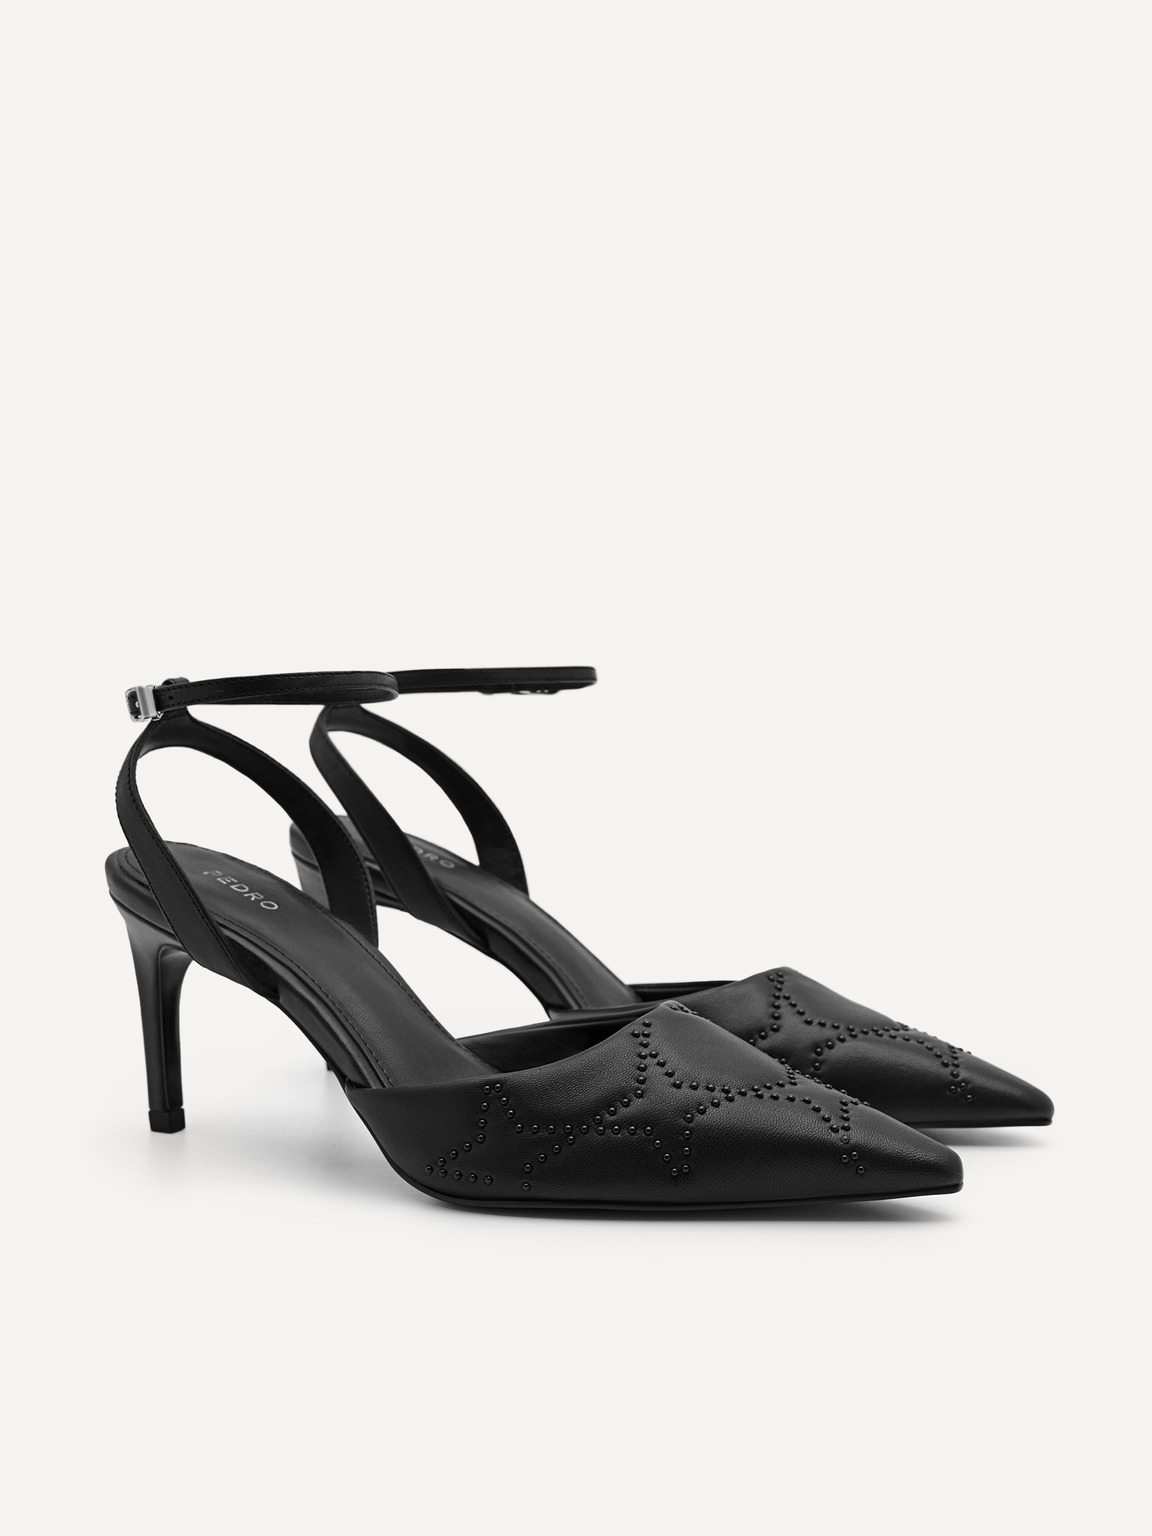 Joan皮革高跟鞋, 黑色